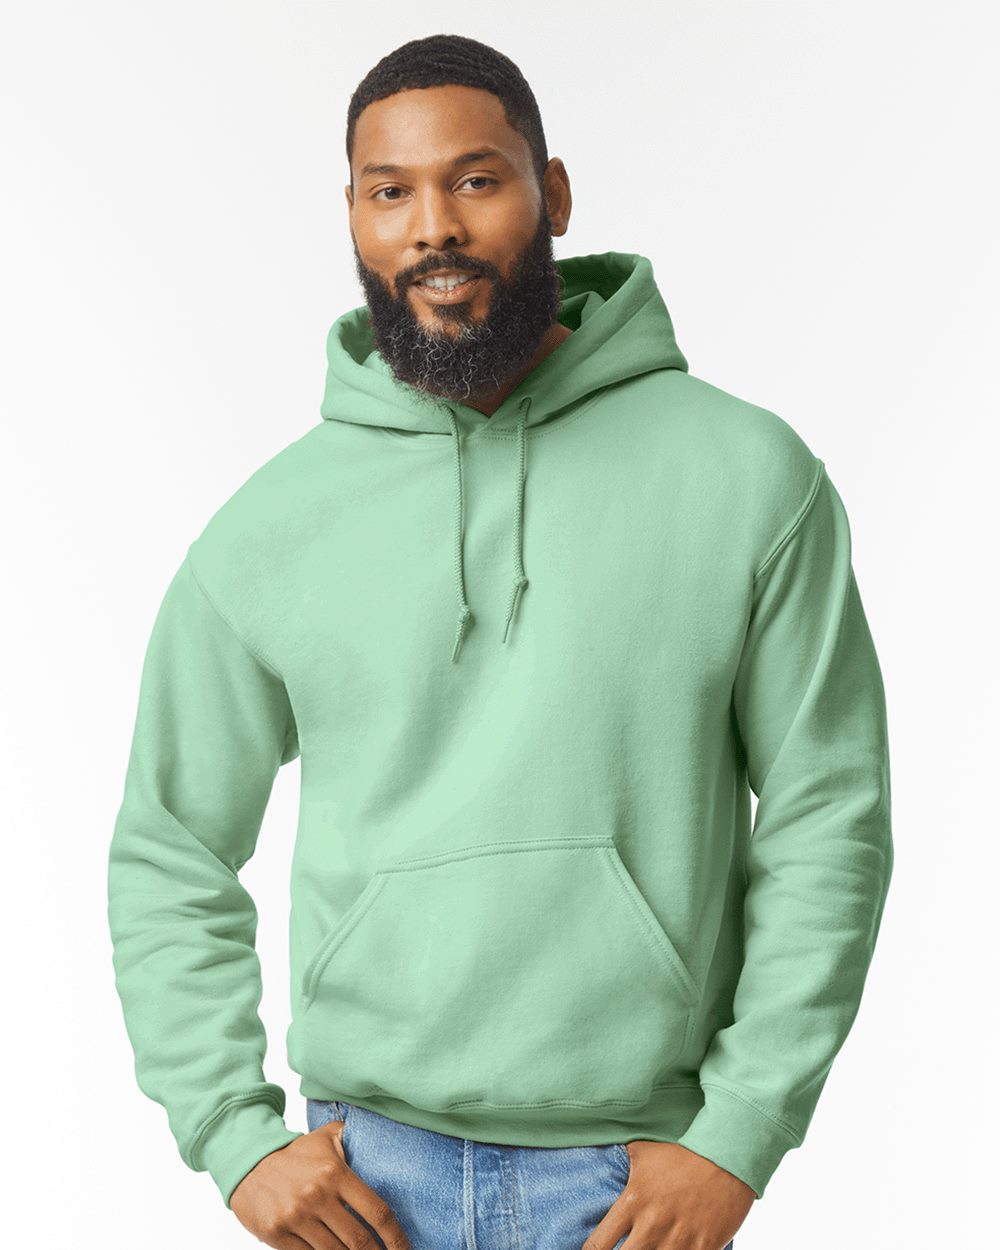 7 Gildan Sports Grey Adult Hooded Sweatshirts Bulk Wholesale Gray Hoodie  S-XL